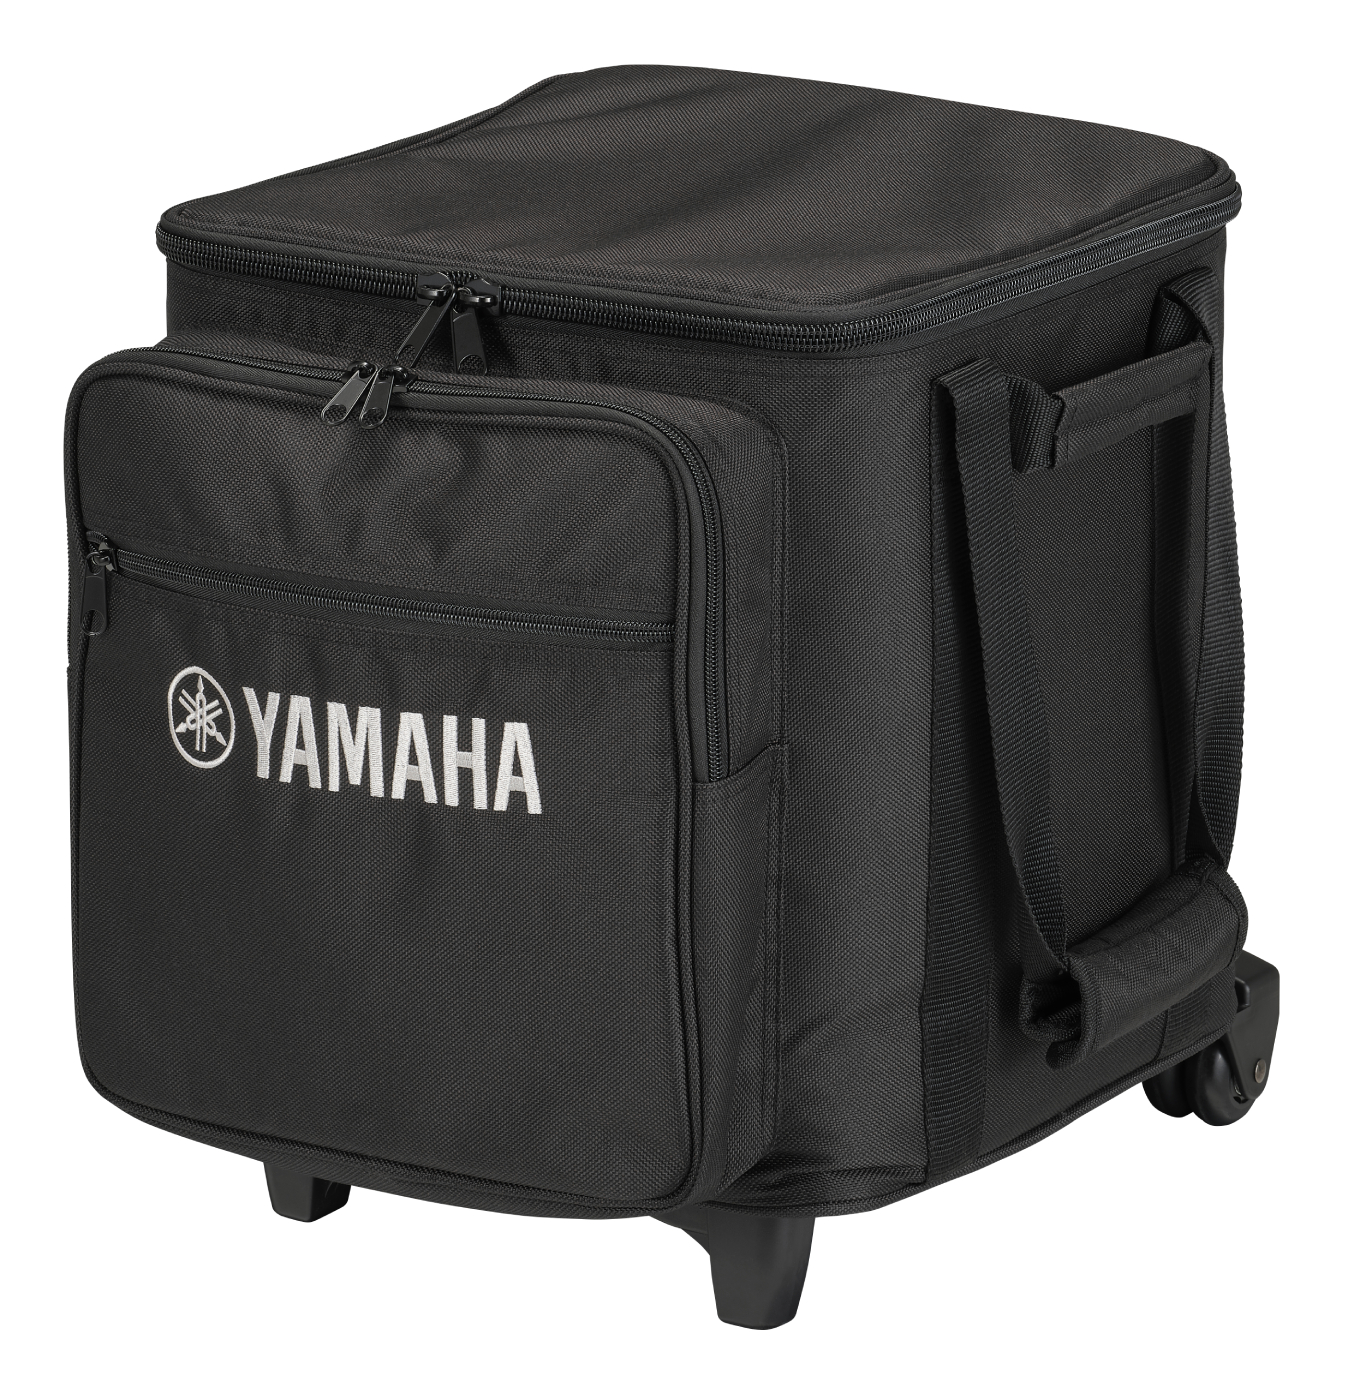 Yamaha Valise Pour Stagepas 200 - Hardware Case - Variation 2